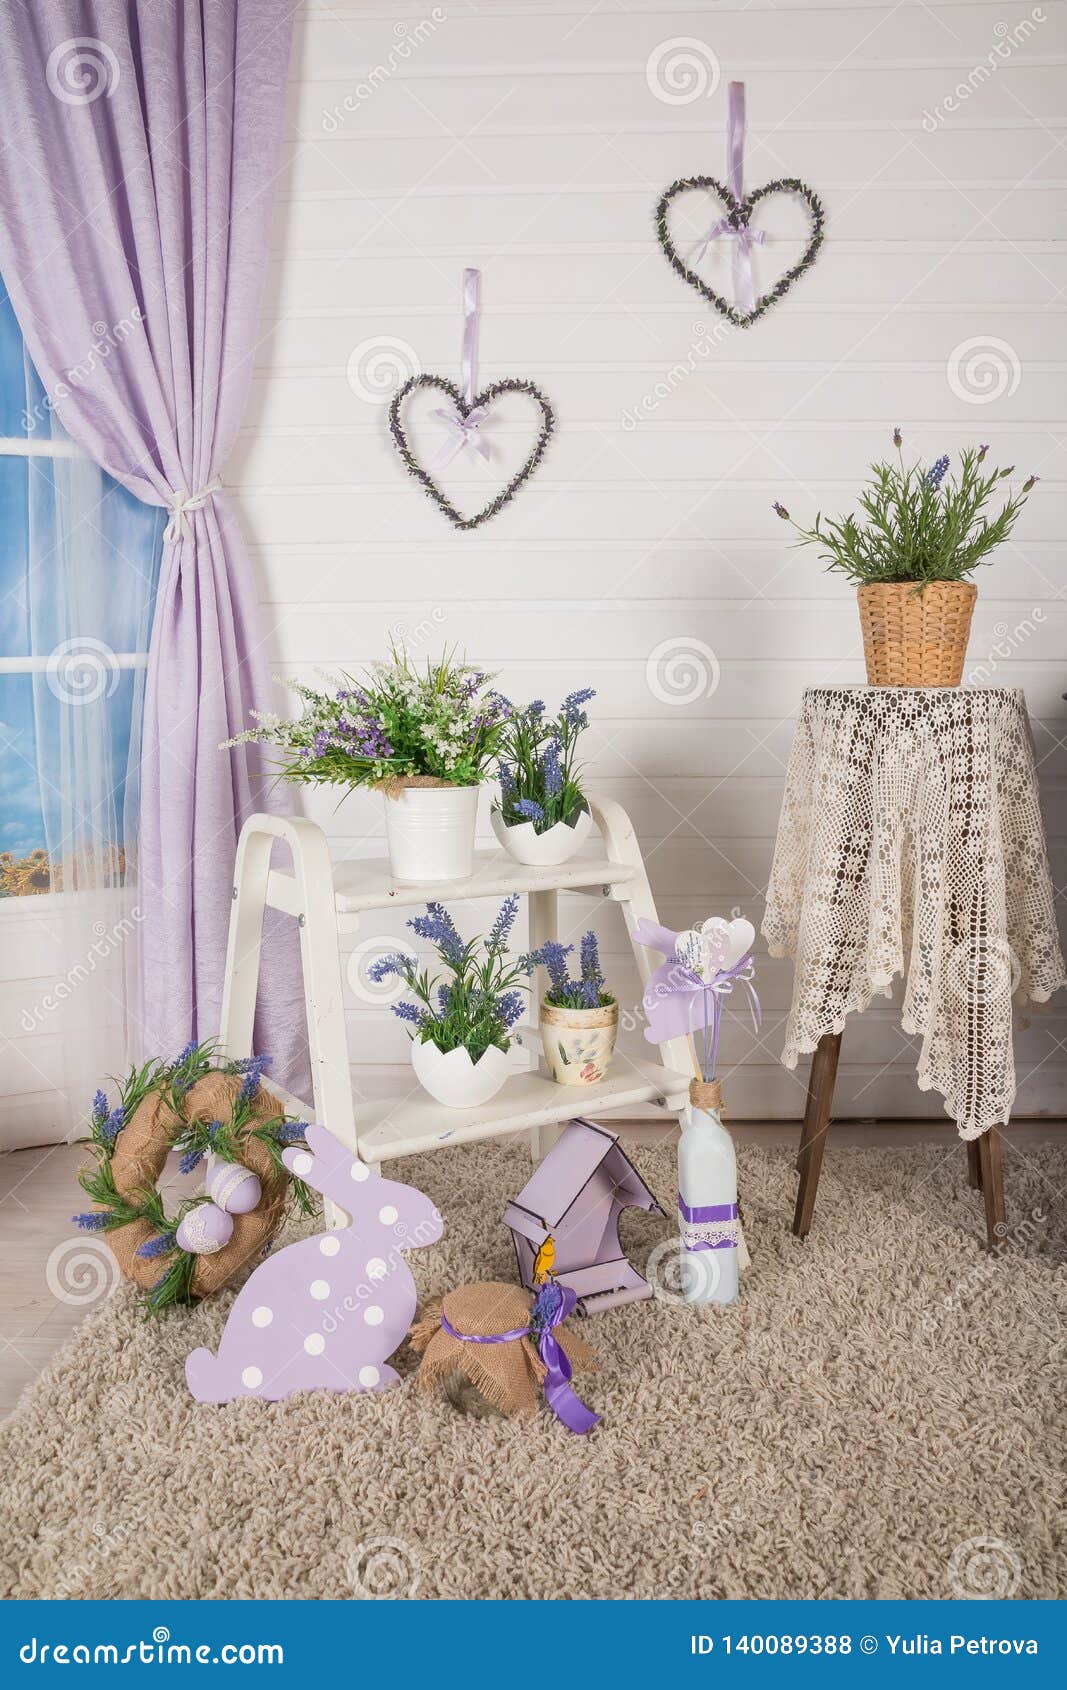 Shabby Chic Interior Decor For Farmhouse Lavende Plant And